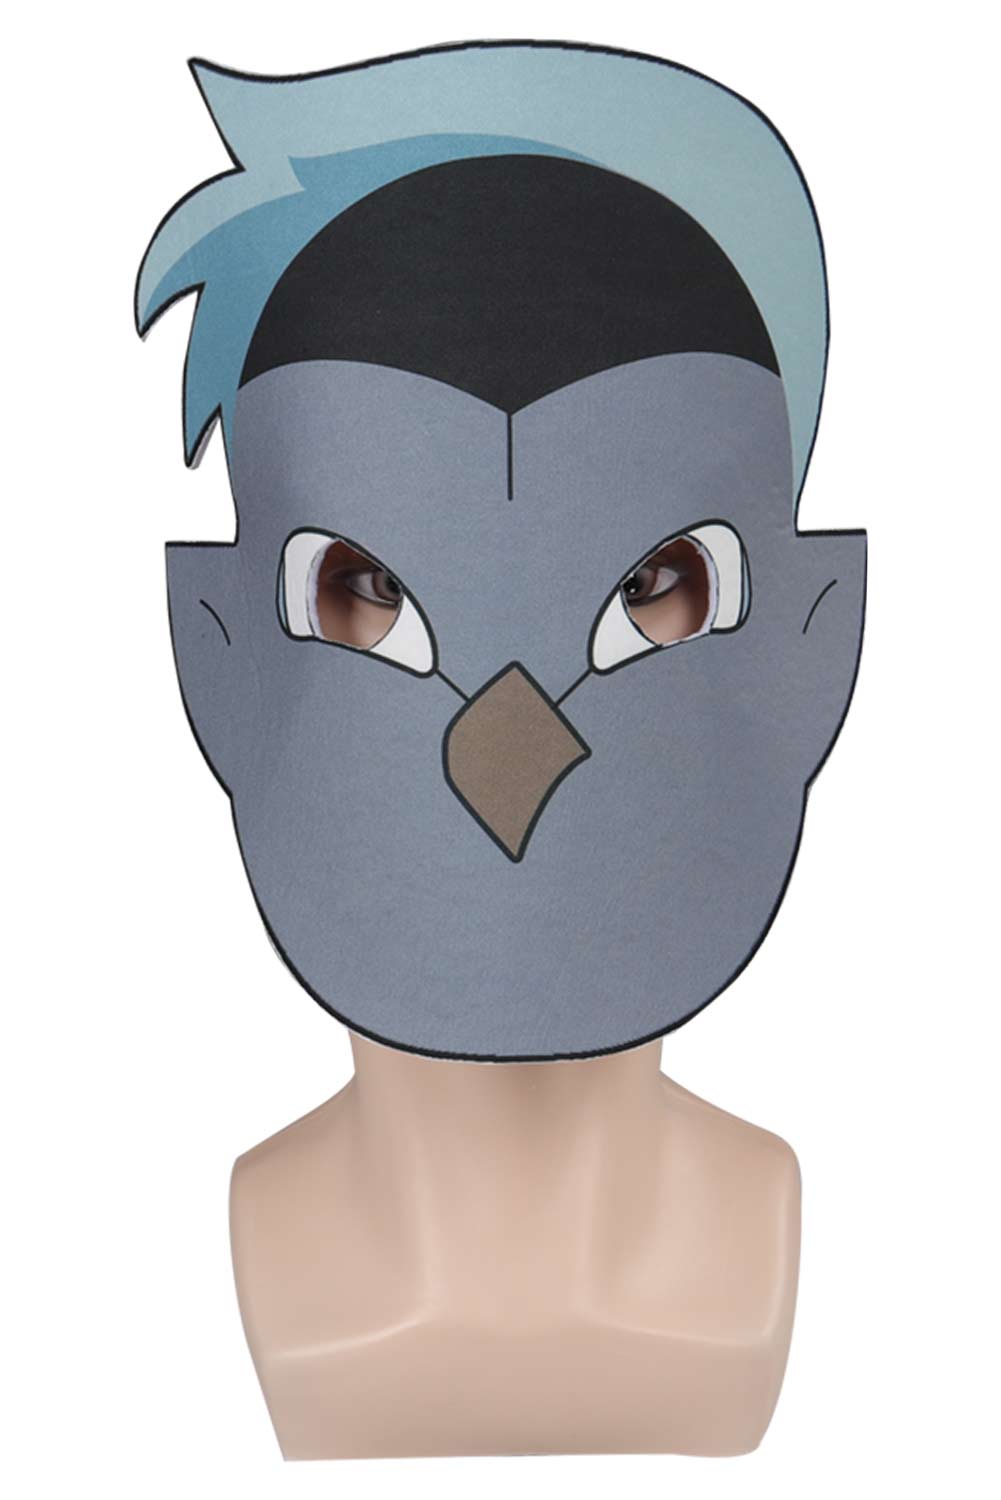 Anime The Owl House Hooty Mask Cosplay Latex Masks Helmet Halloween Costume Props